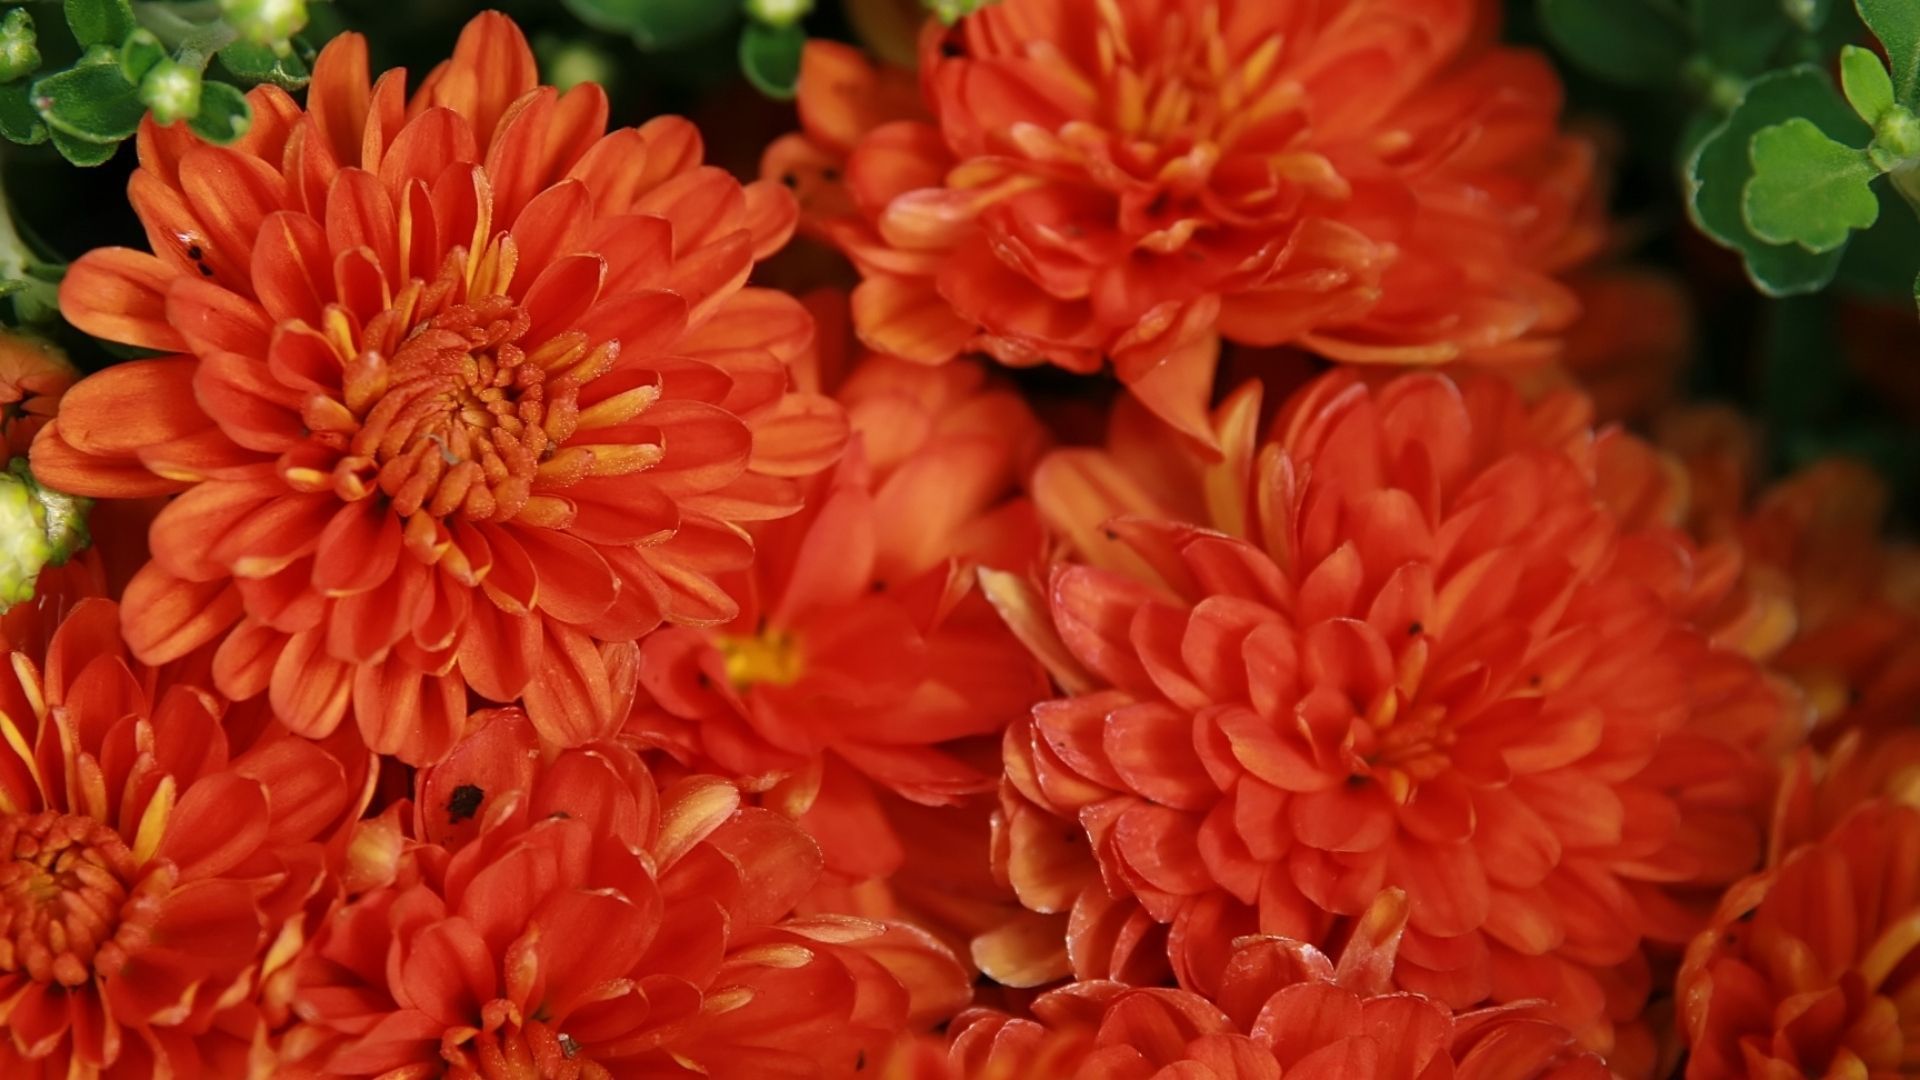 Most beautiful flowers: Chrysanthemum